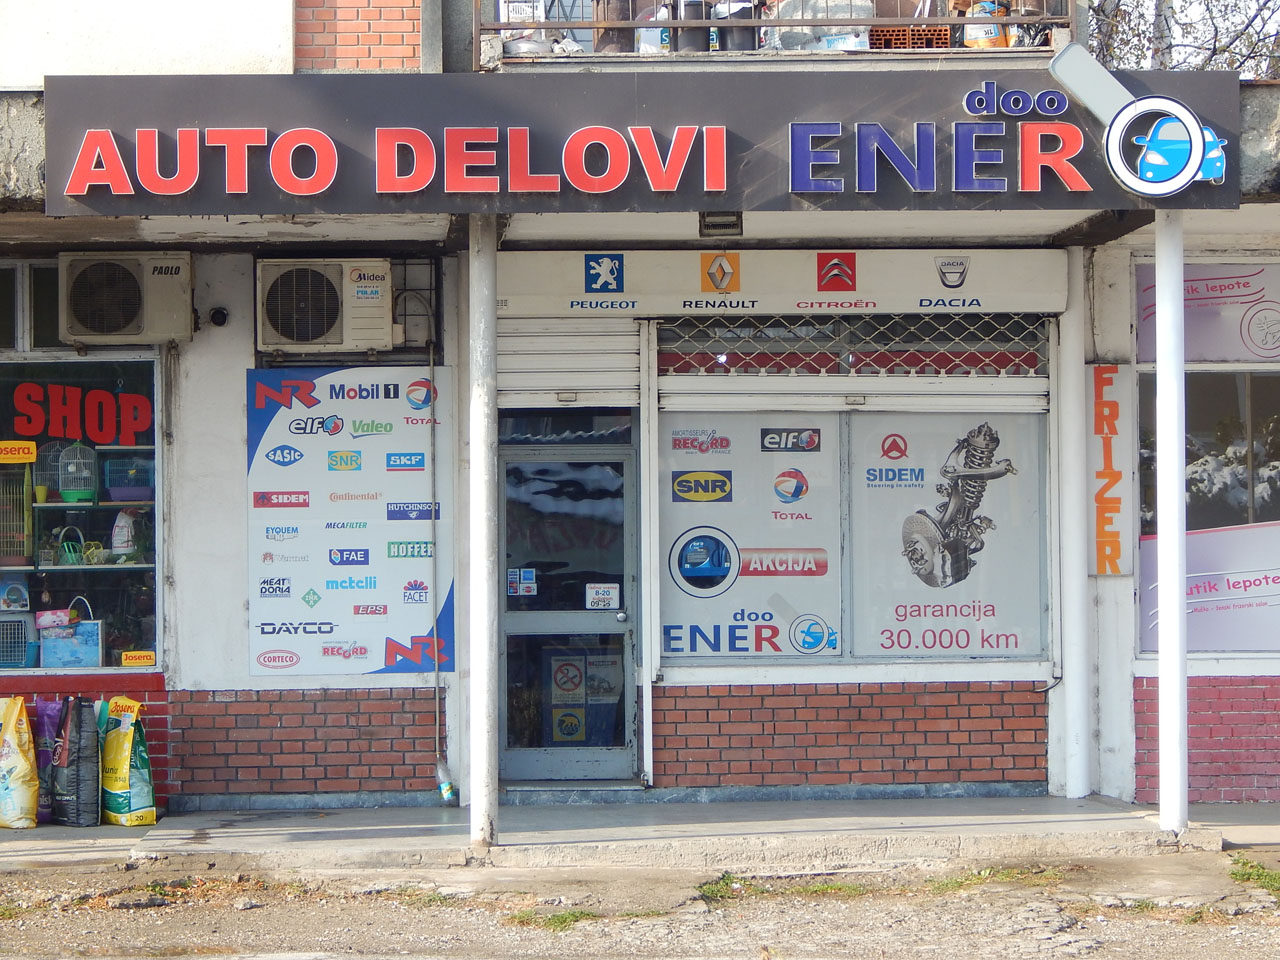 ENER DOO Vehicle registration and testing Kragujevac - Photo 2